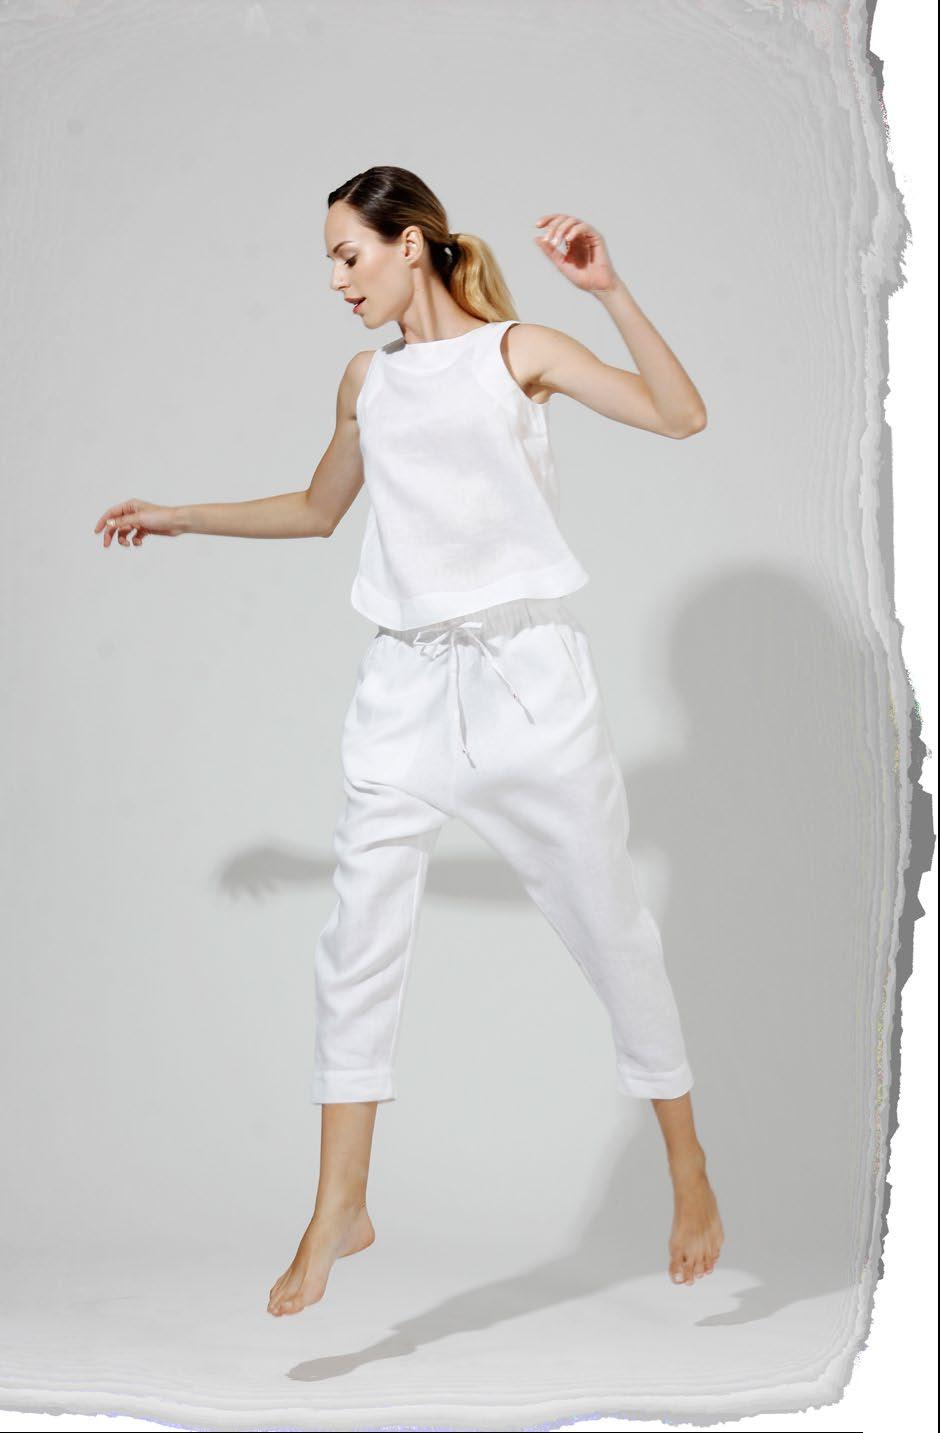 & essentials Vanna tailored sleeveless top in linen super light LG 636 BI XS, S, M, L,